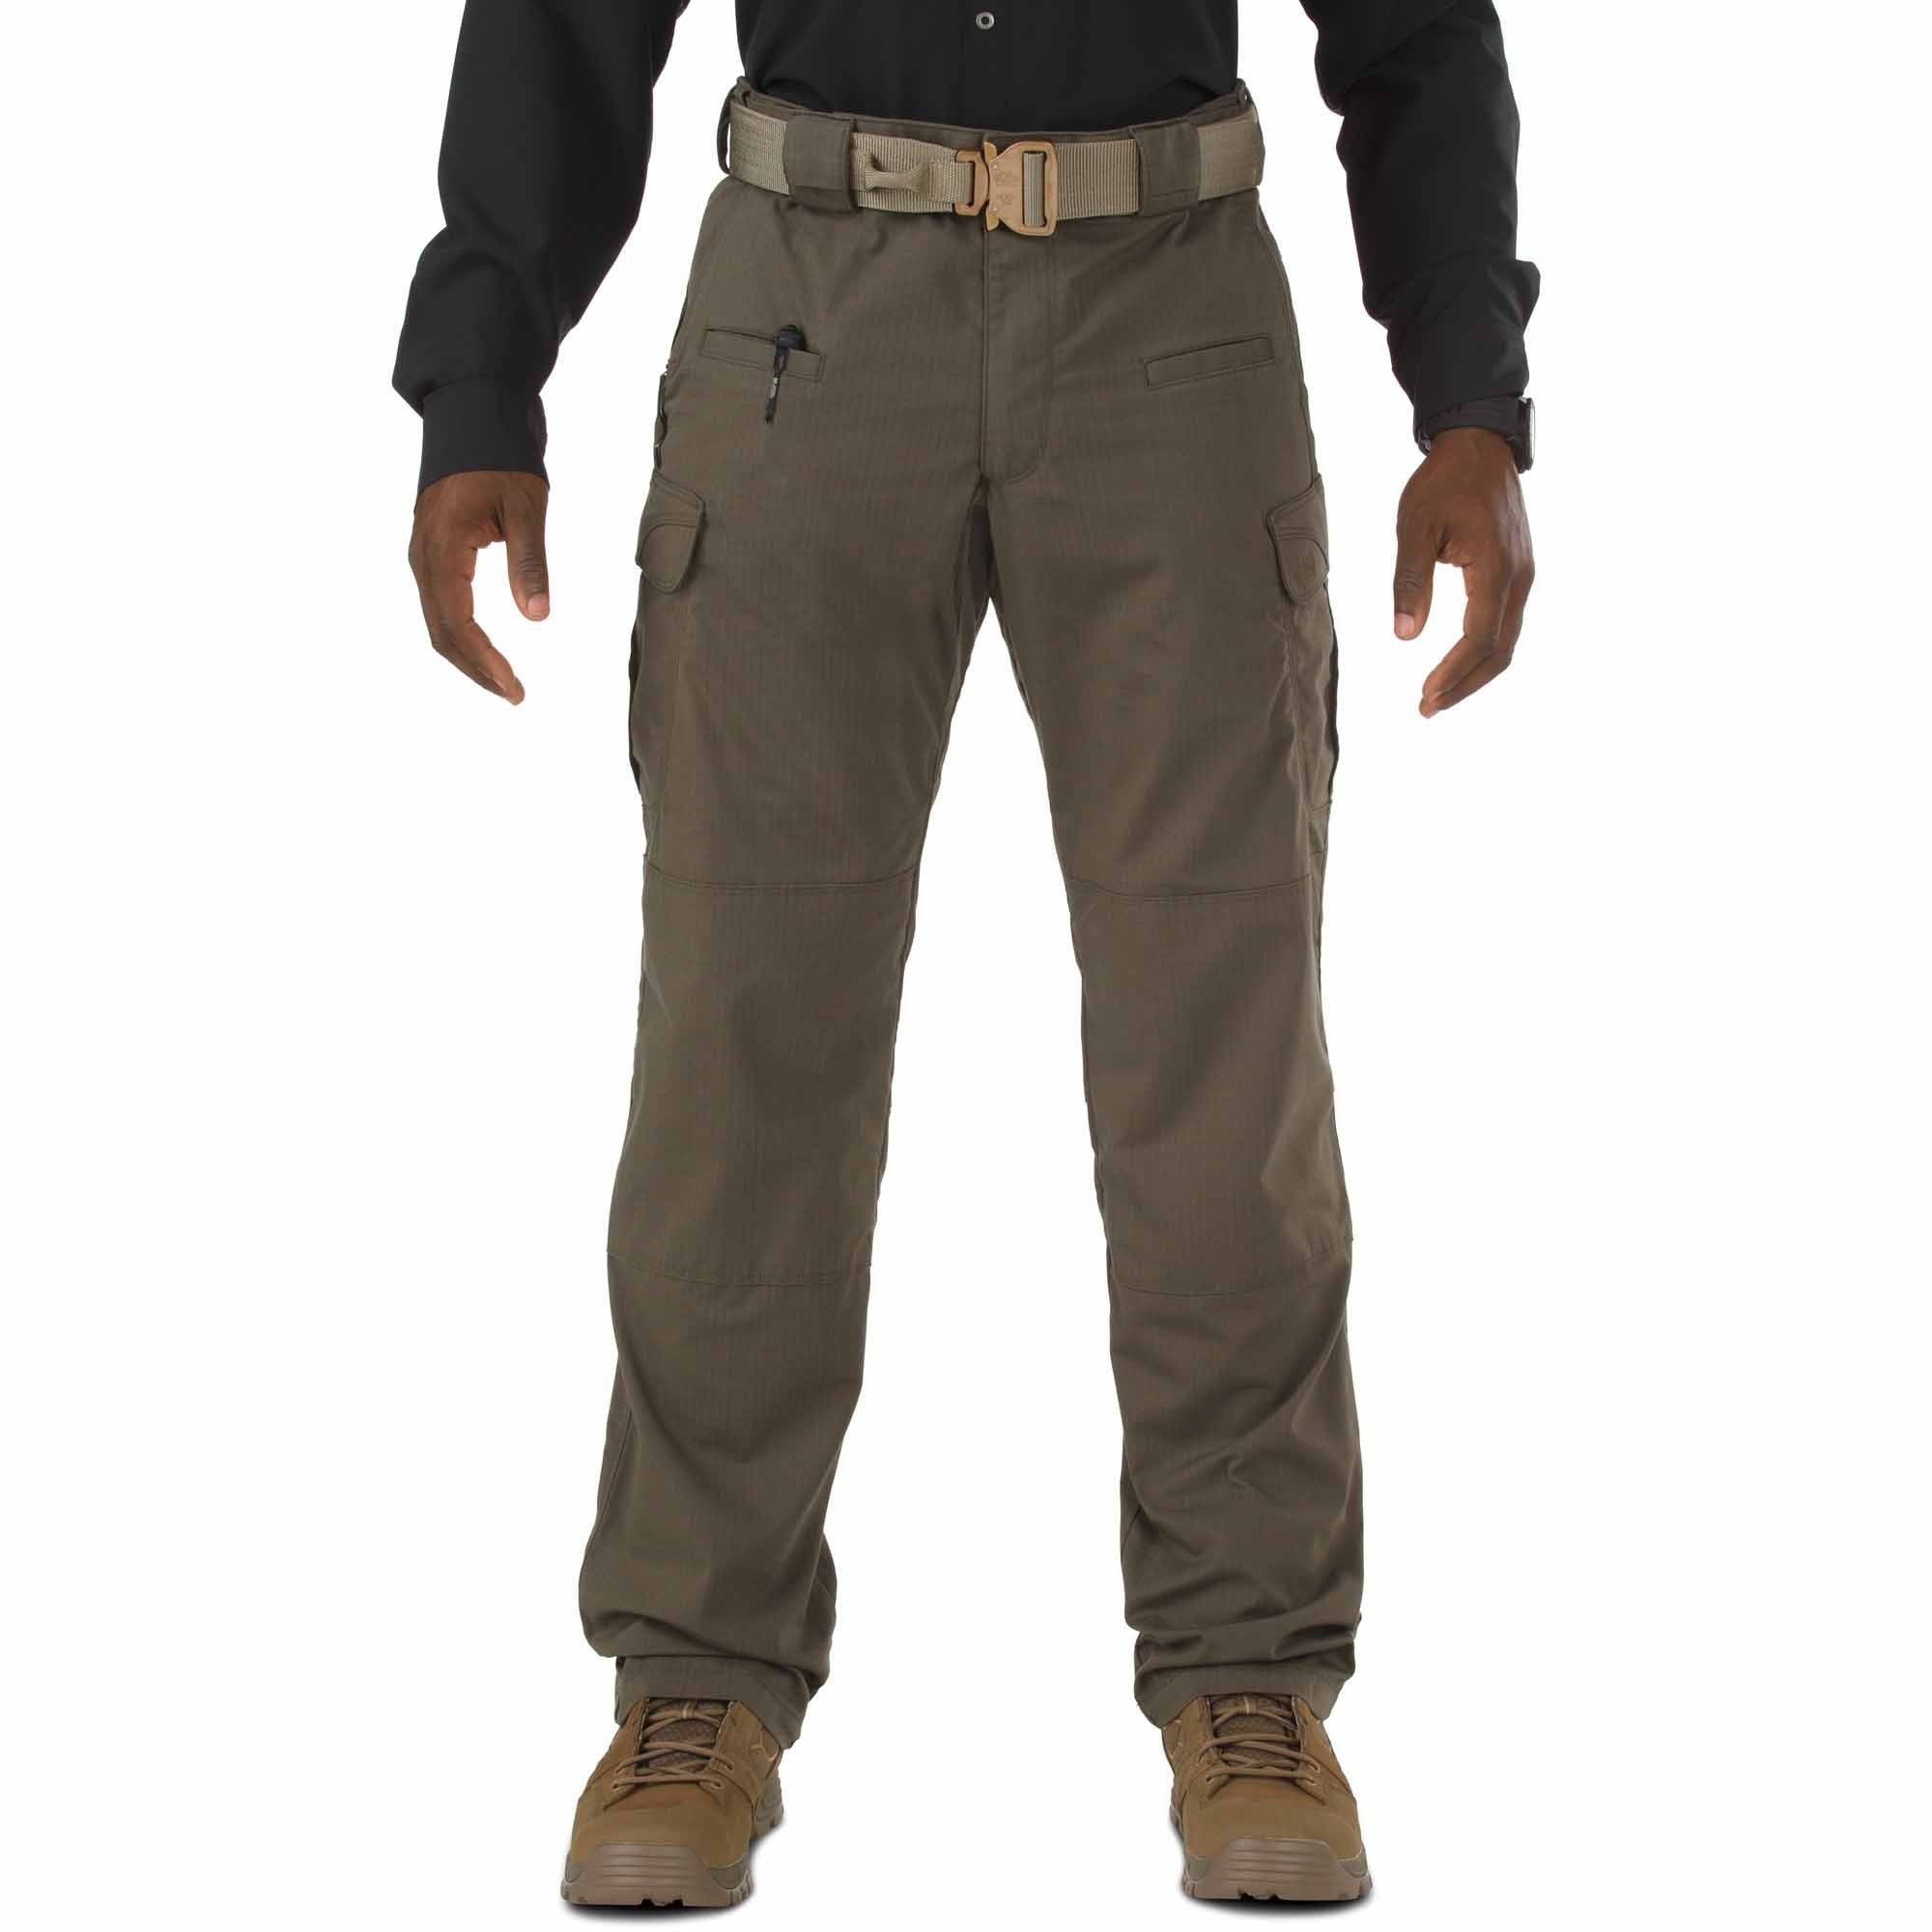 5.11 Tactical Stryke Pants with FlexTac Tundra Pants 5.11 Tactical Tactical Gear Supplier Tactical Distributors Australia